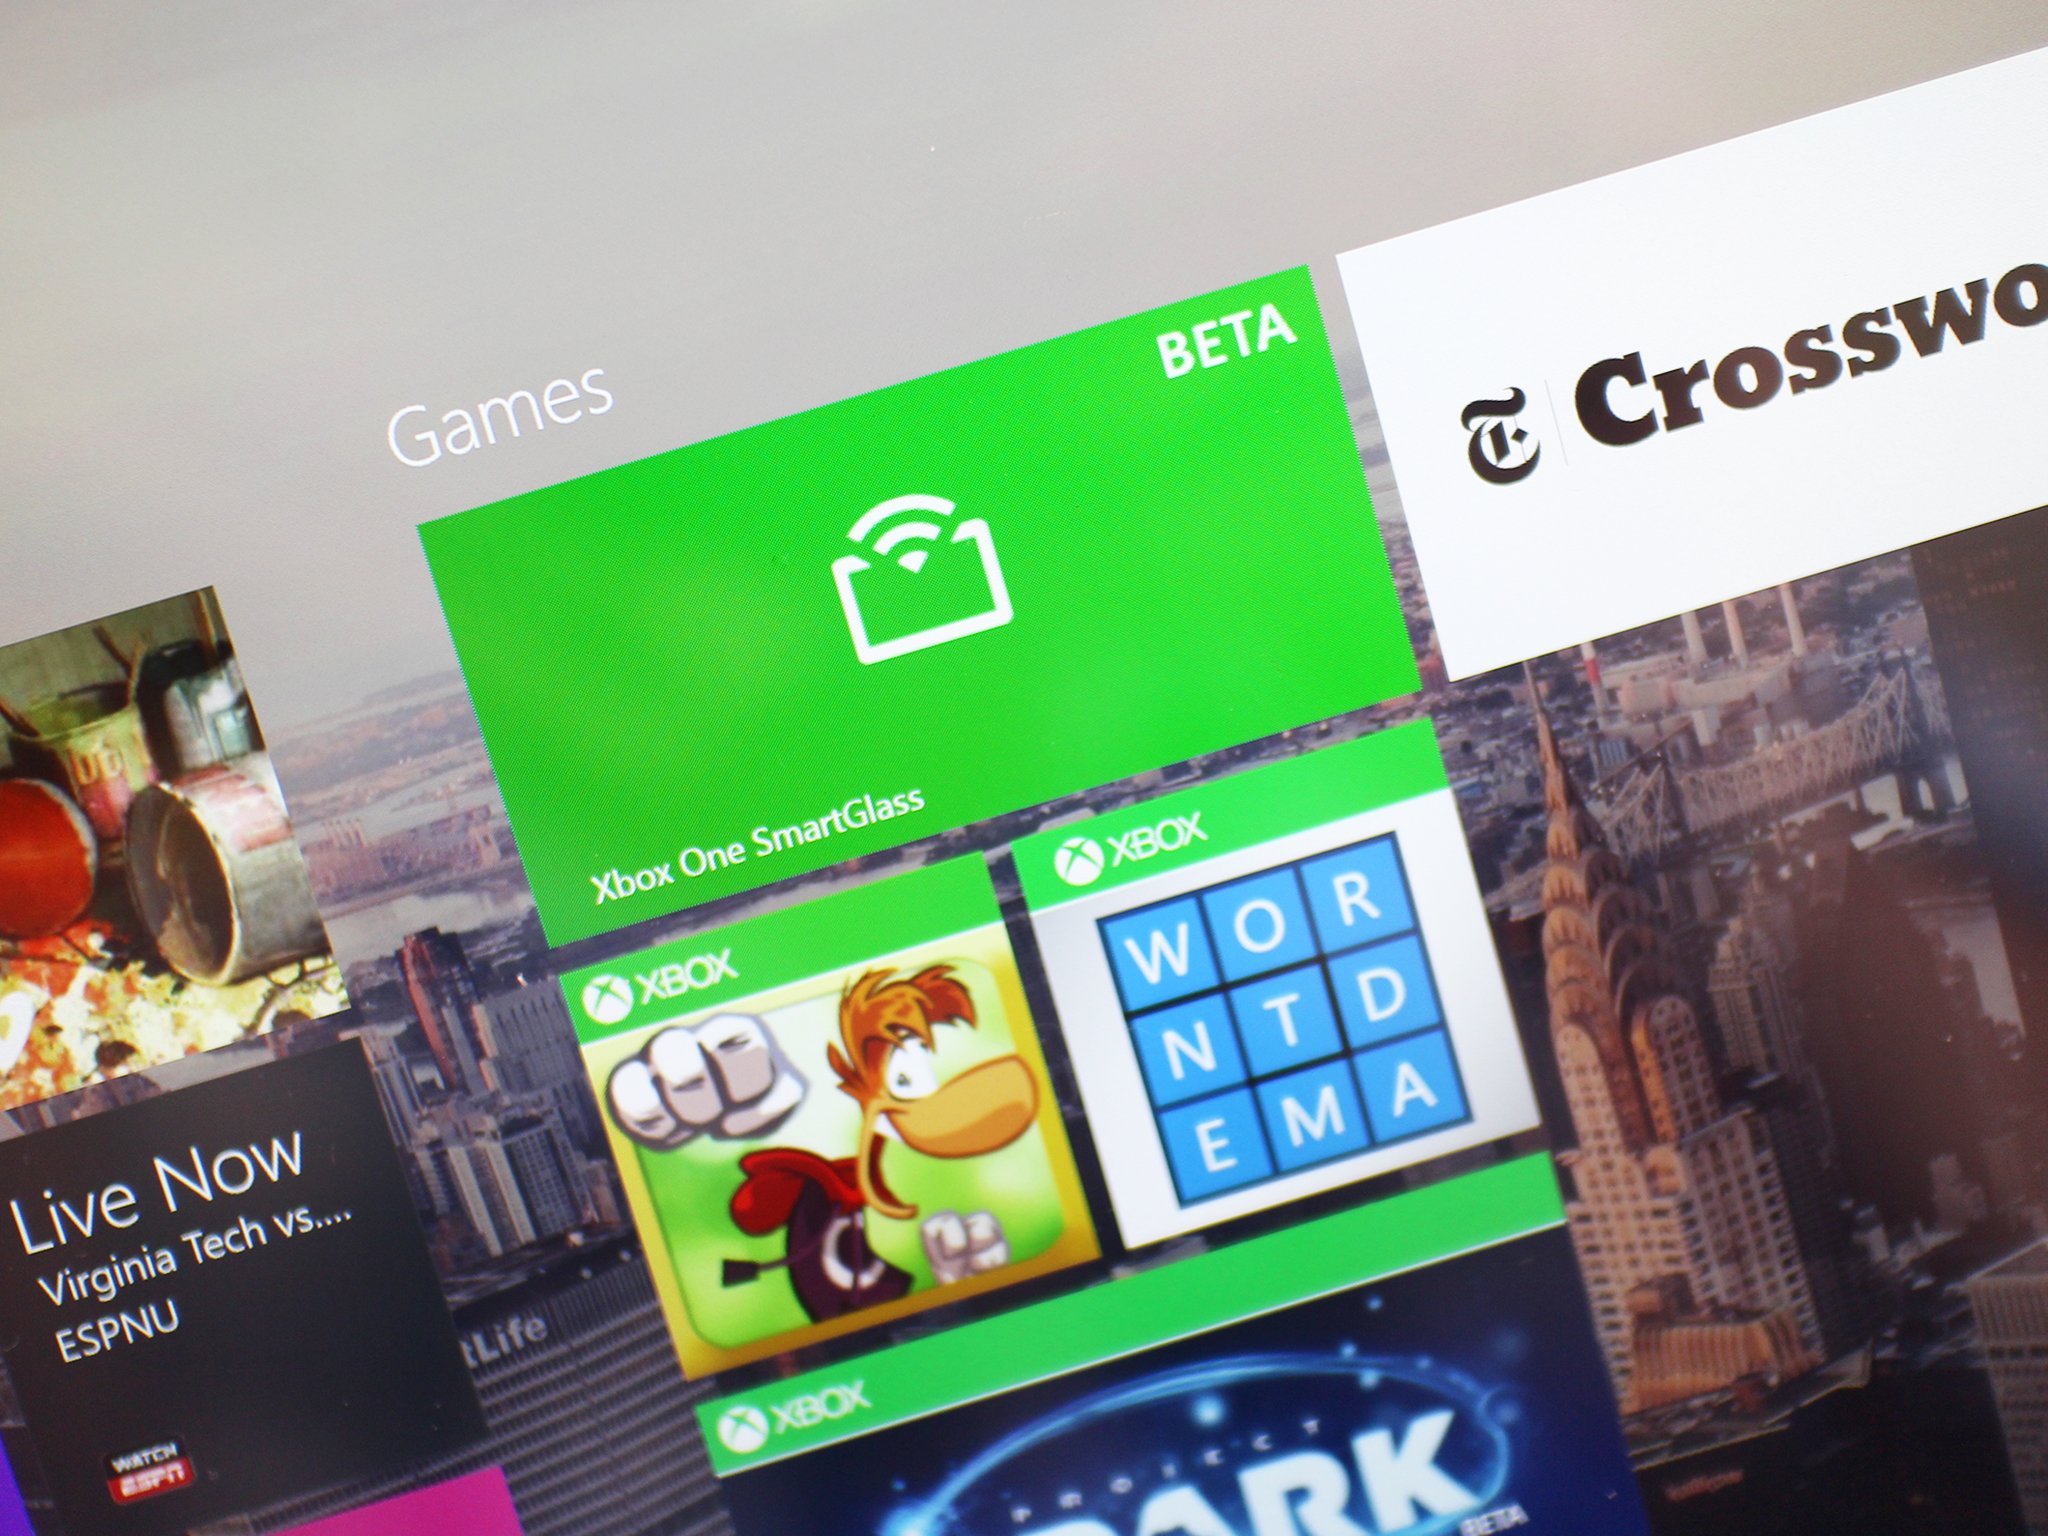 Xbox_One_SmartGlass_Beta_Windows_Tile.jpg